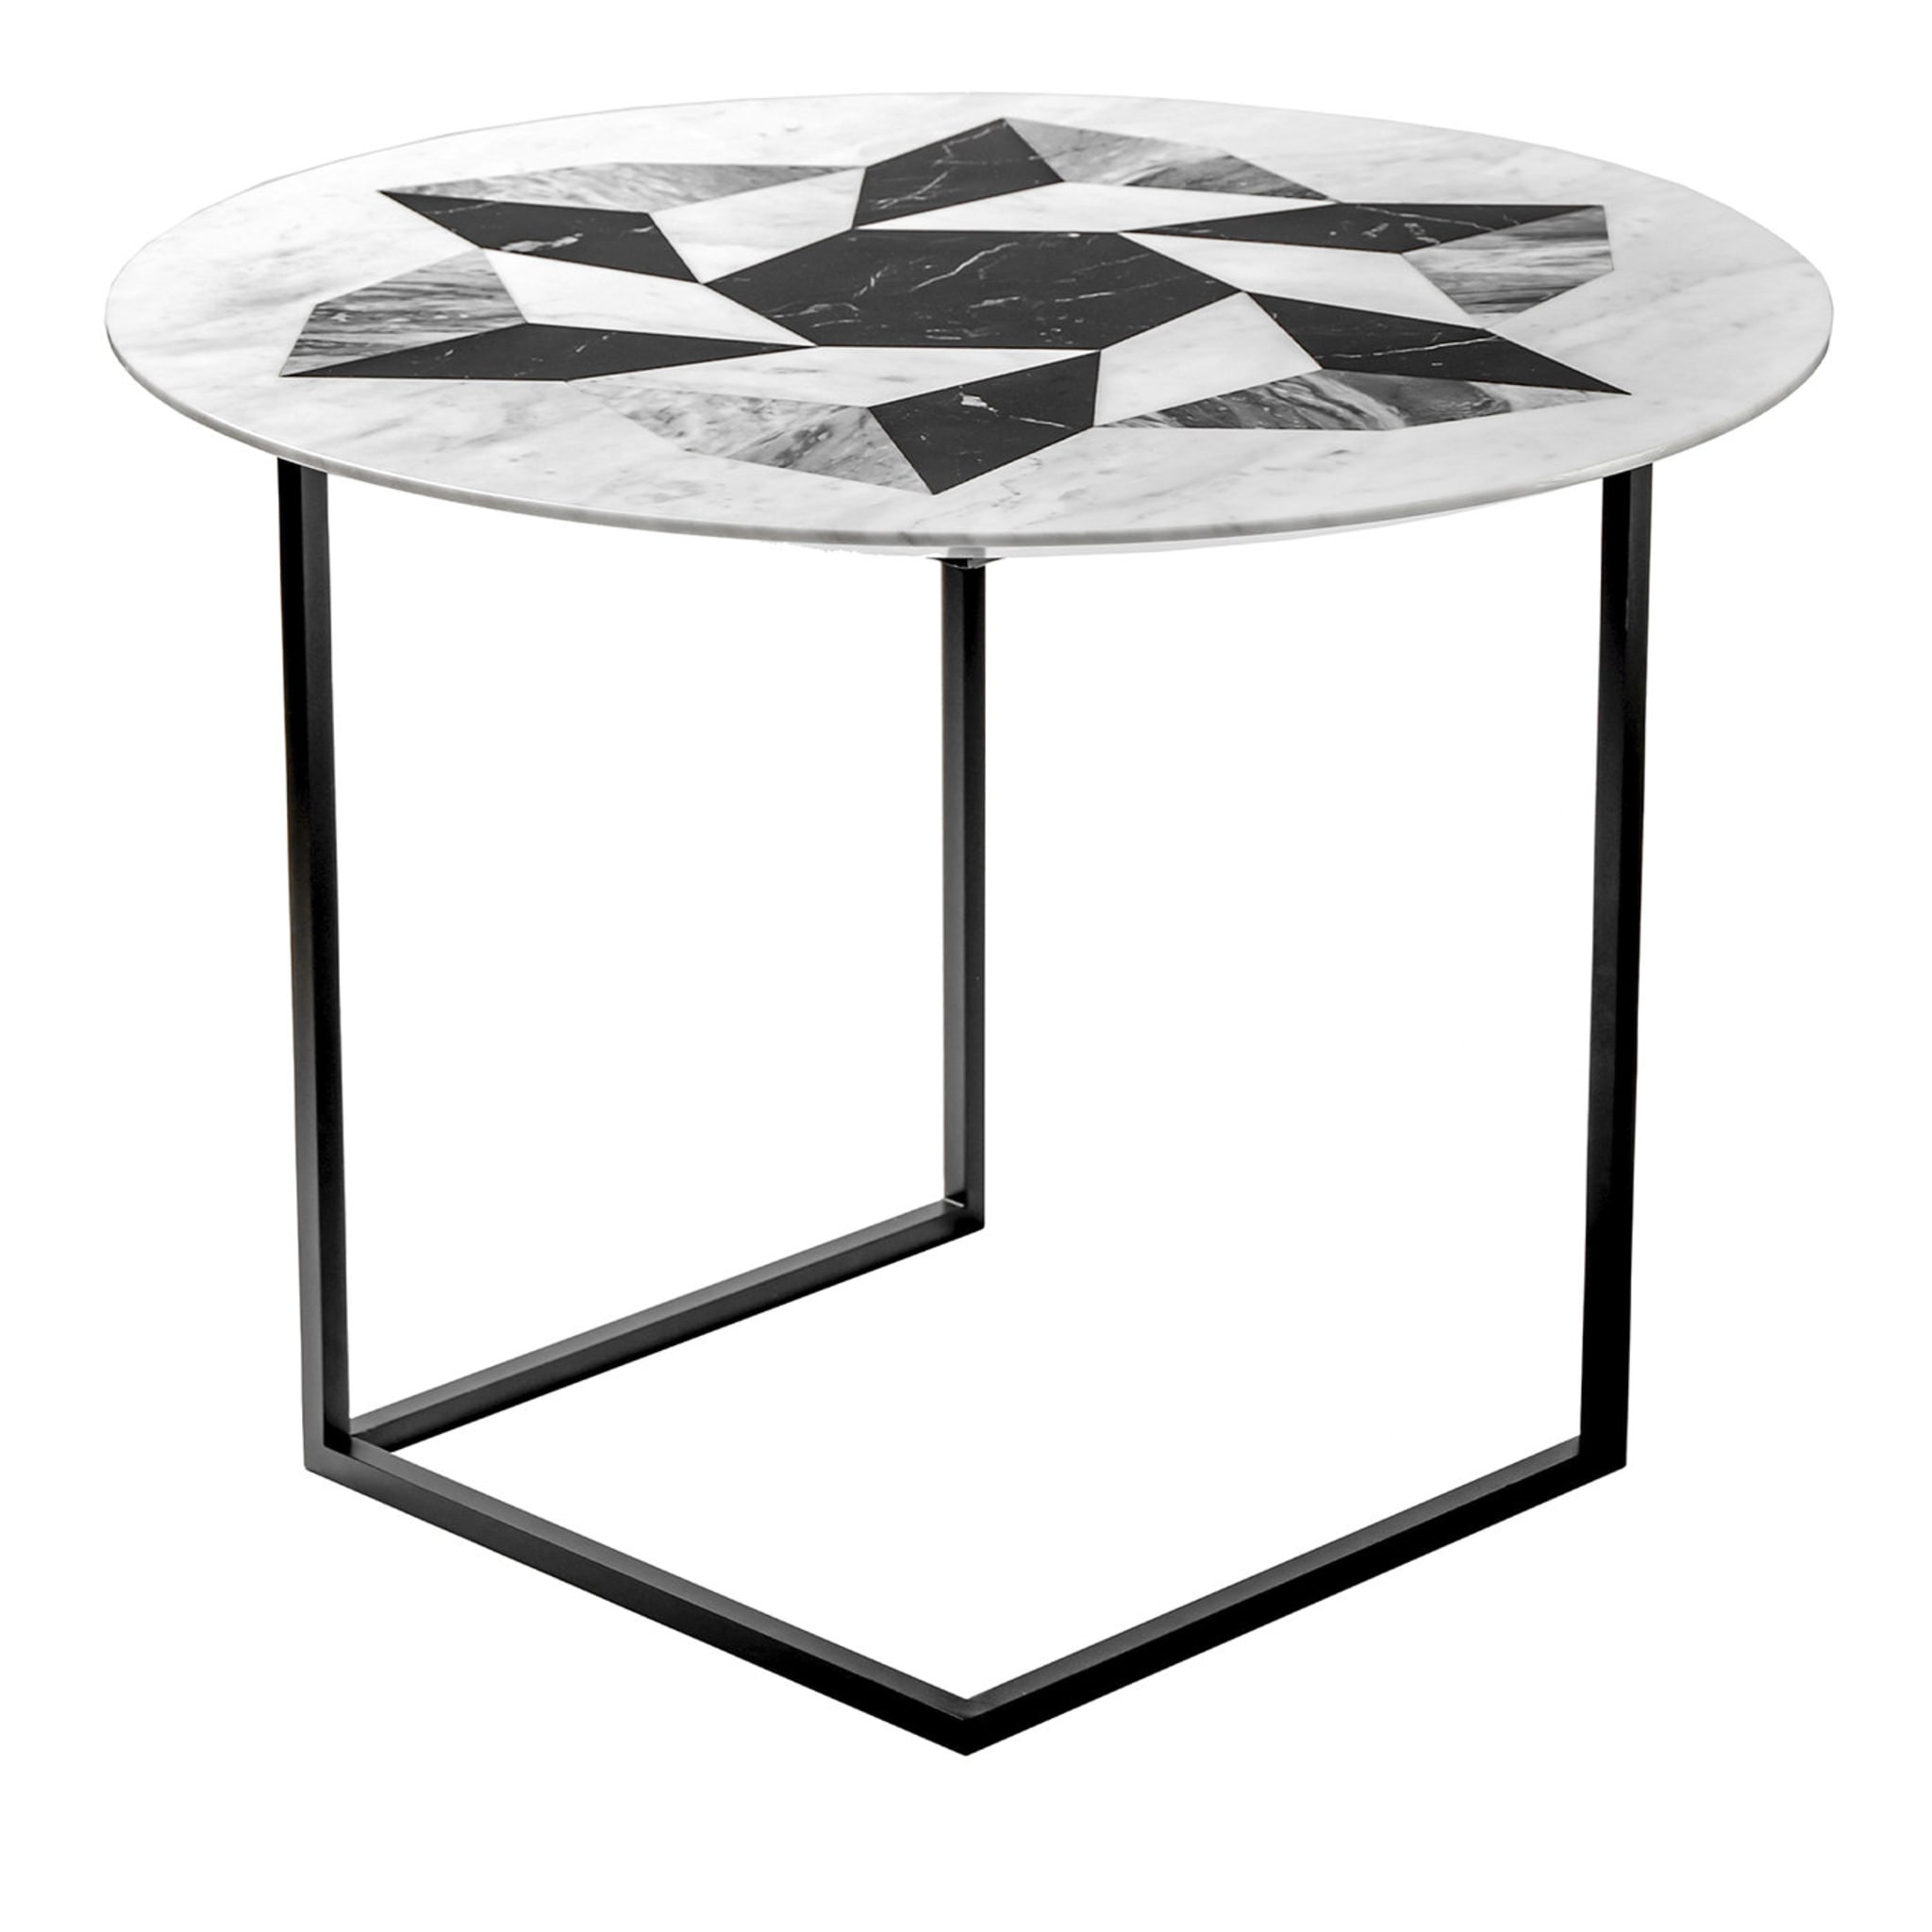 Esopo Side Table with Geometric Wheel by Antonio Saporito - Main view